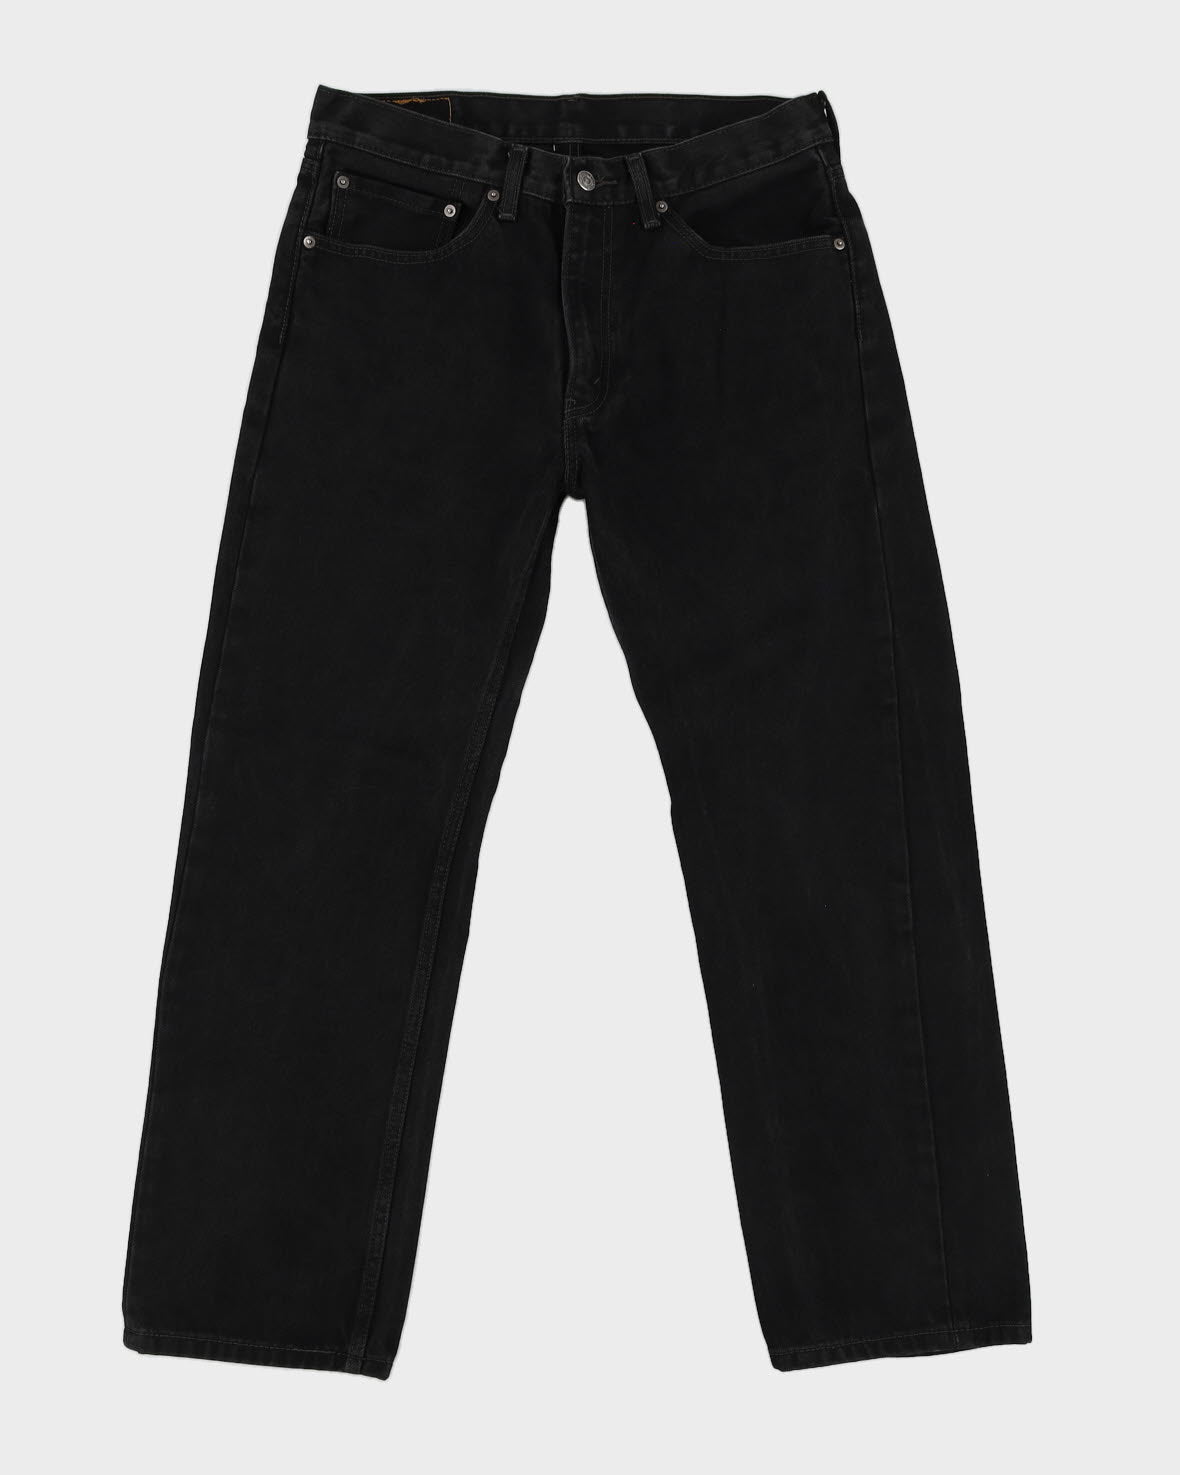 Levi's 505 Black Jeans - W33 L30